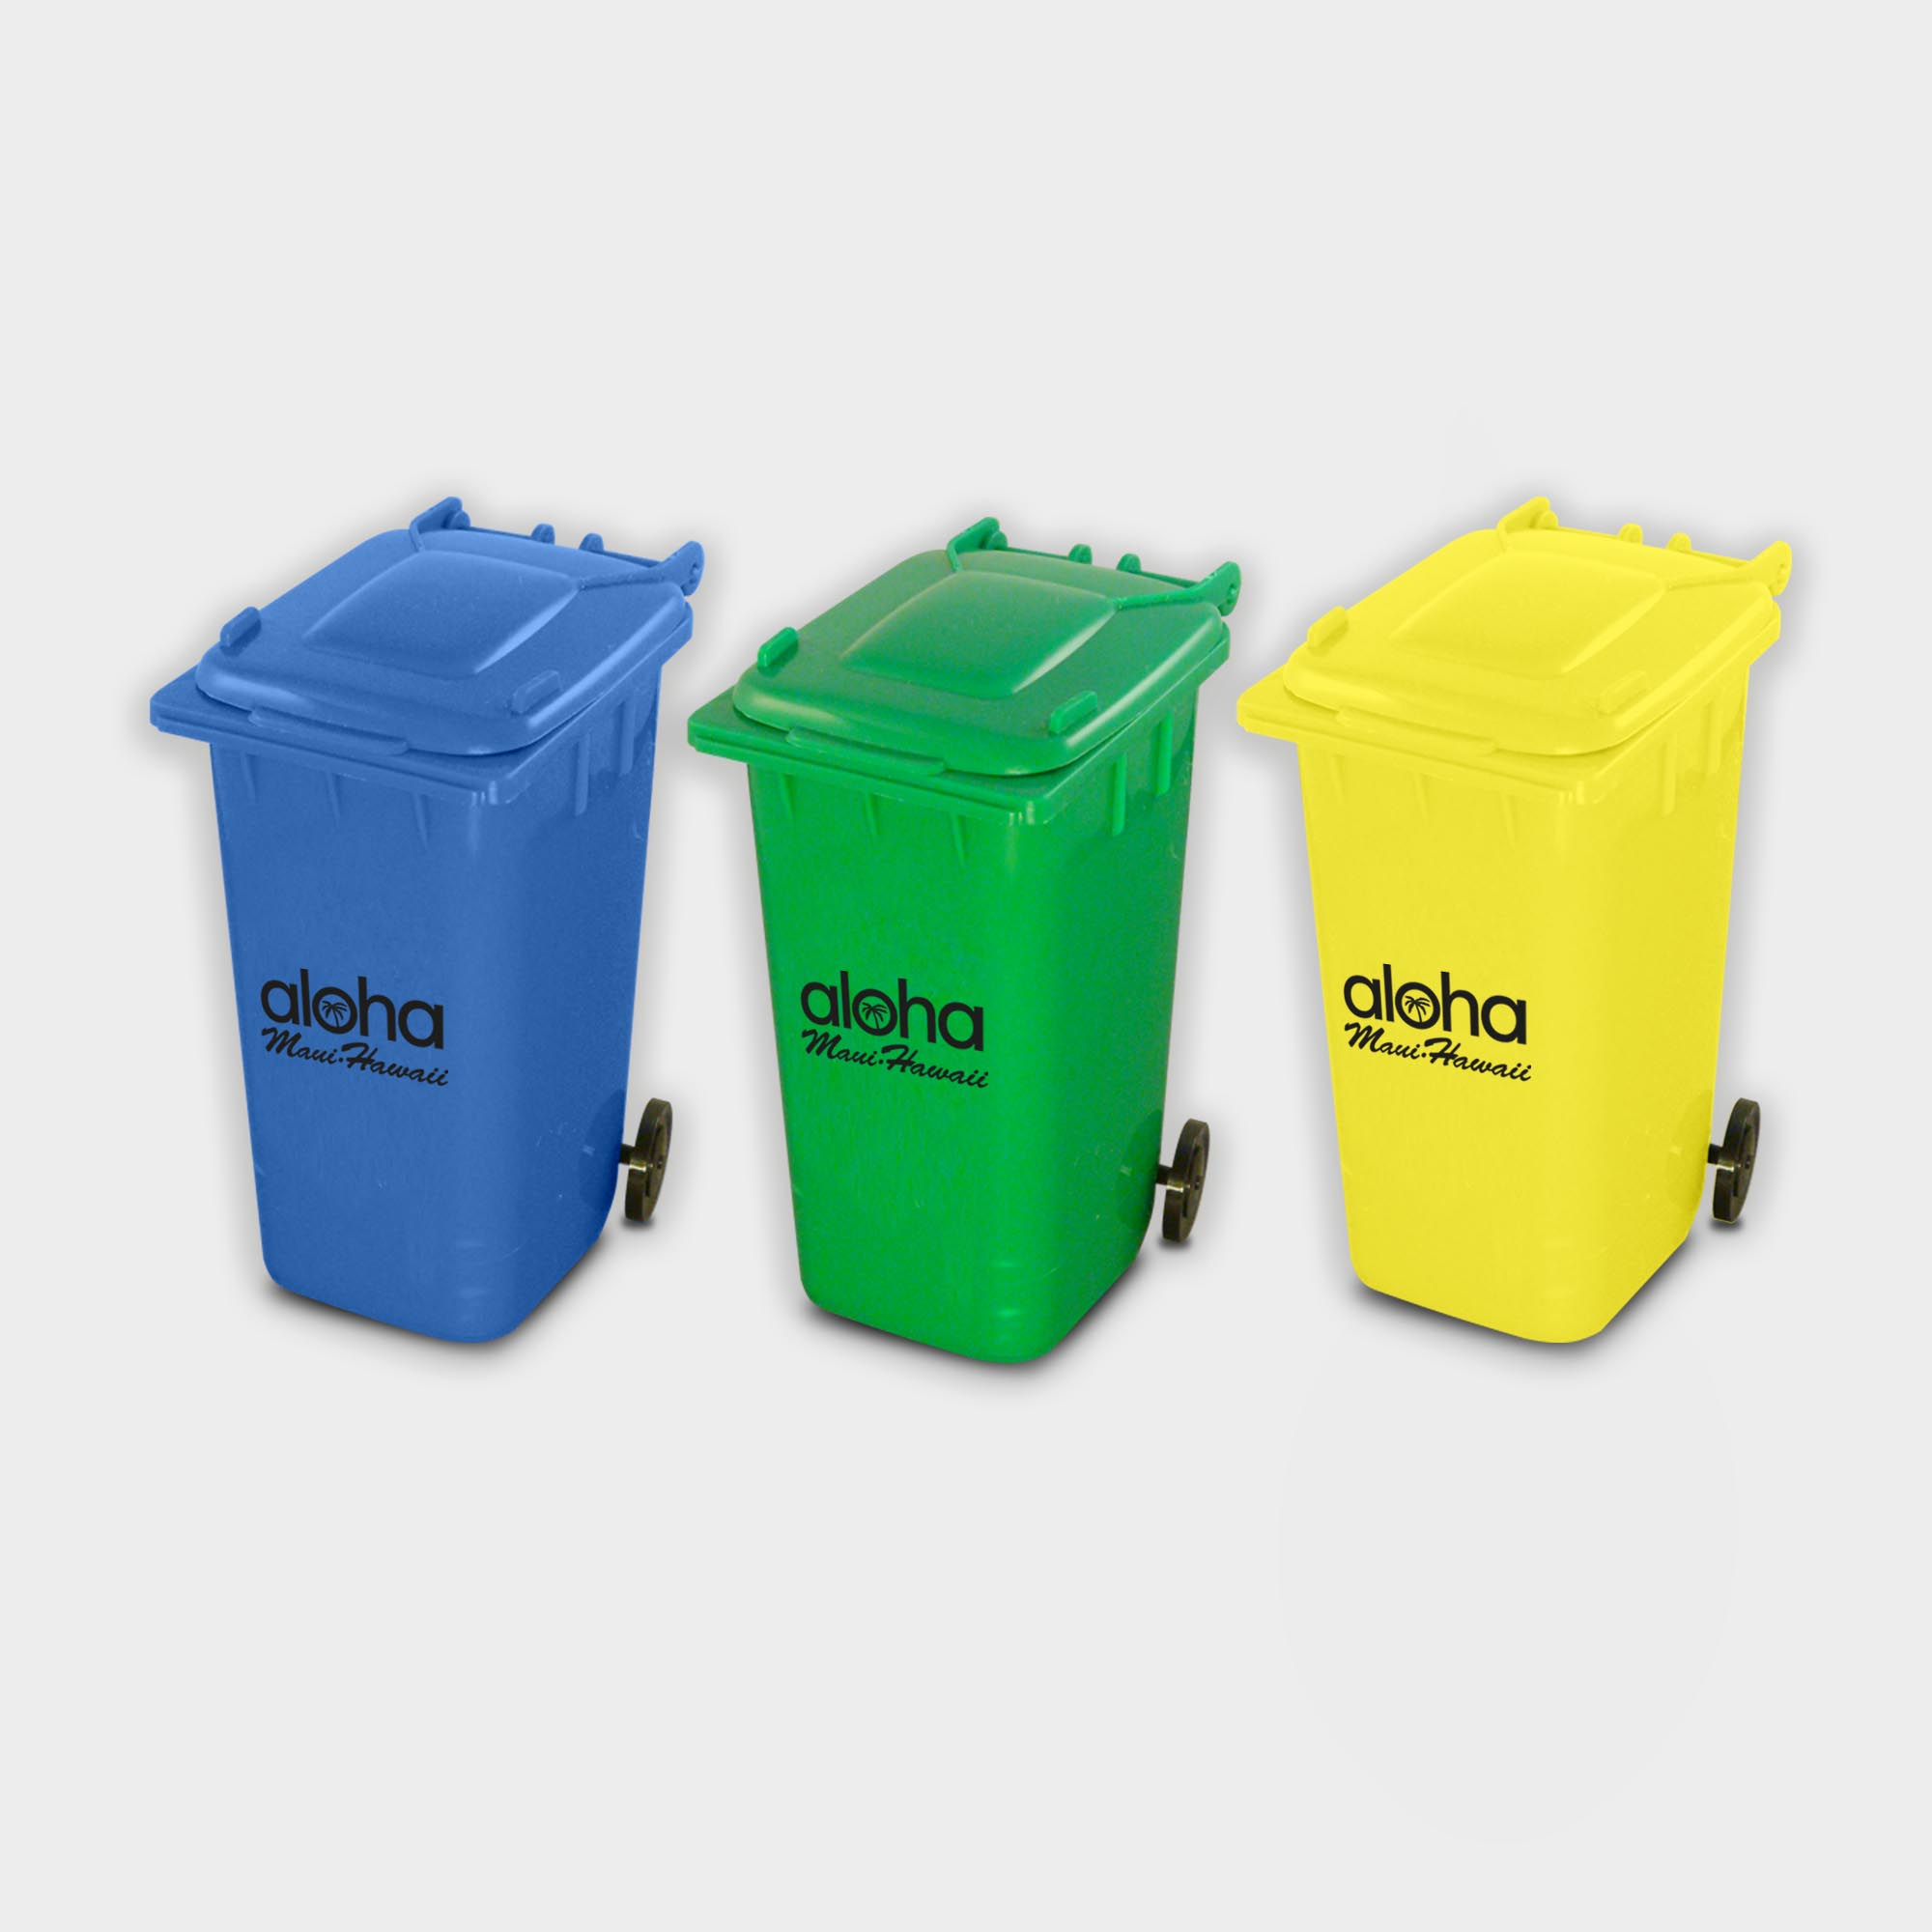 Der Green & Good Stiftehalter aus recyceltem Polypropylen-Kunststoff